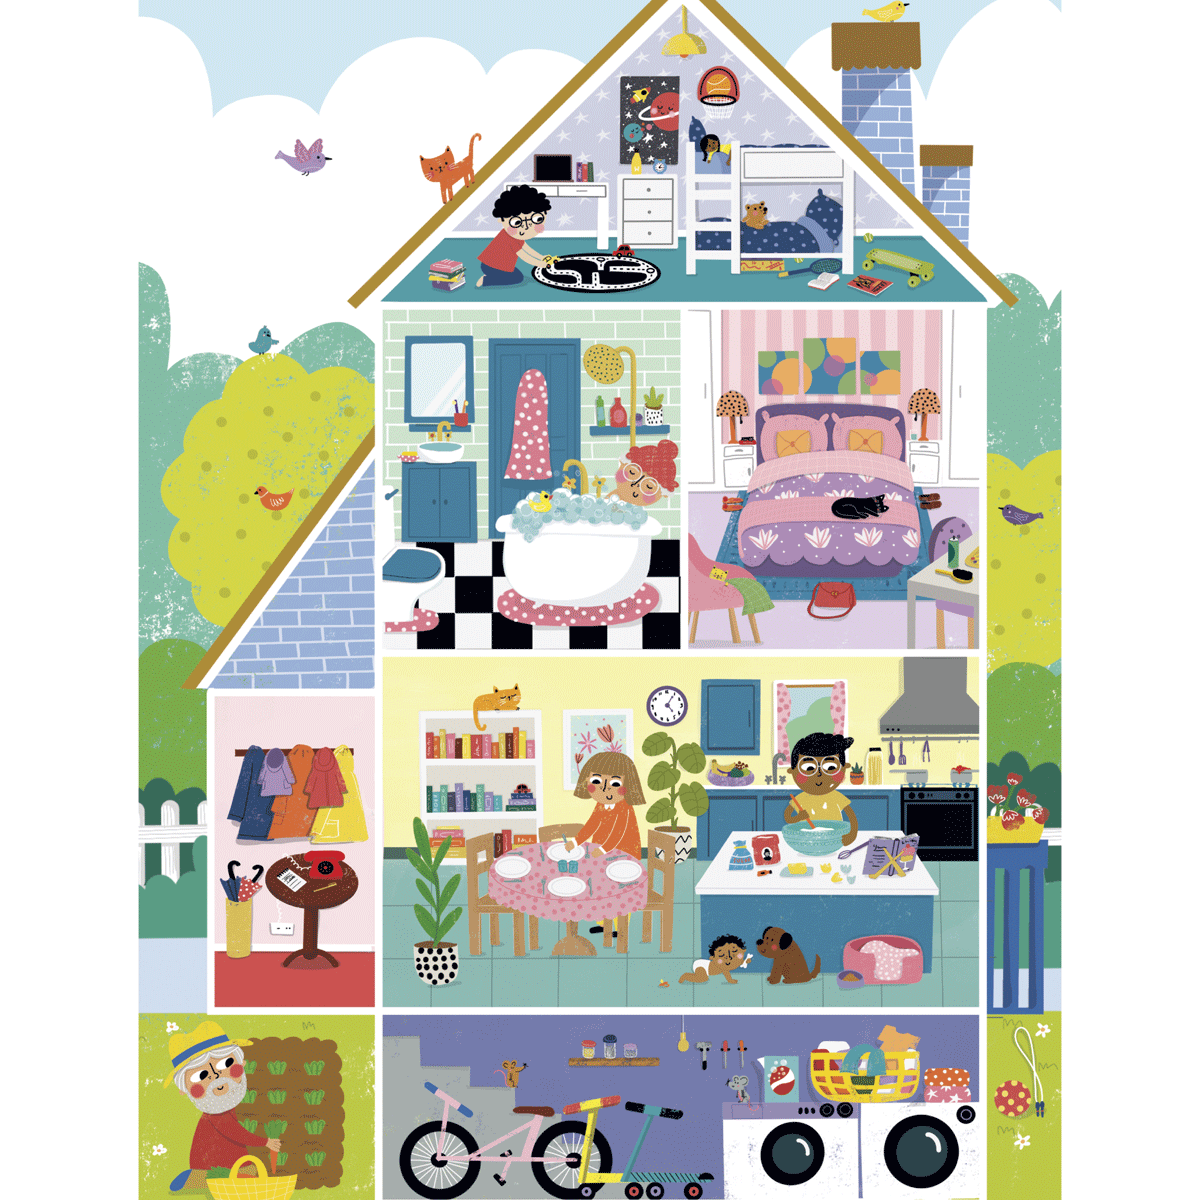 Clementoni supercolor puzzle home sweet home - 104 maxi pezzi, puzzle bambini 4 anni - CLEMENTONI